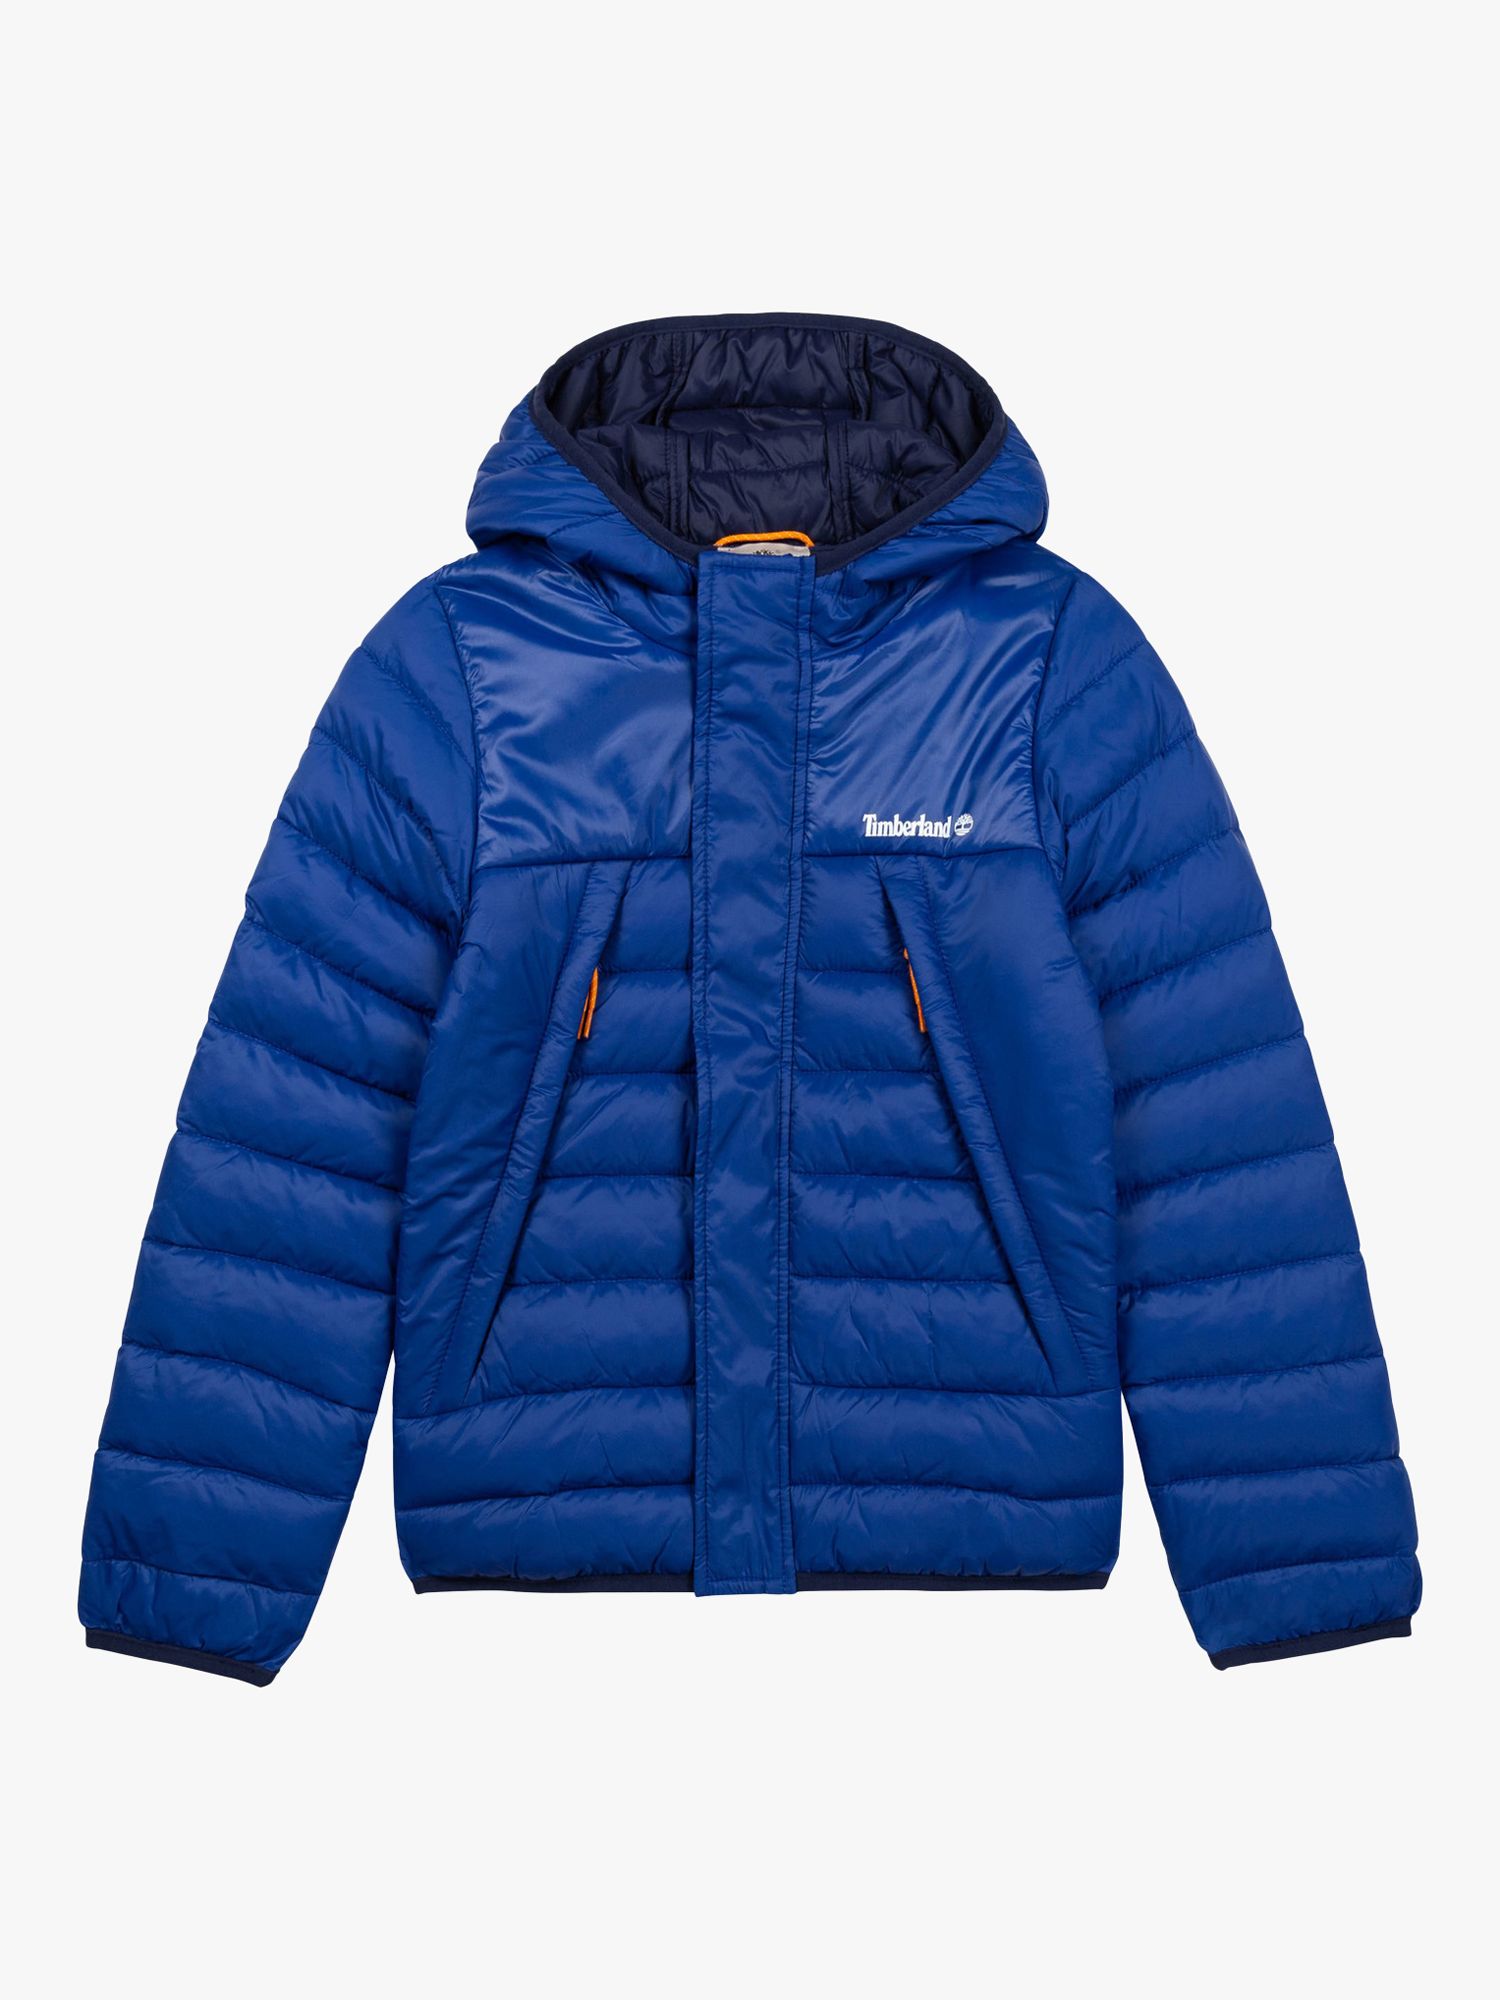 Timberland Kids' Windbreaker Puffer Jacket